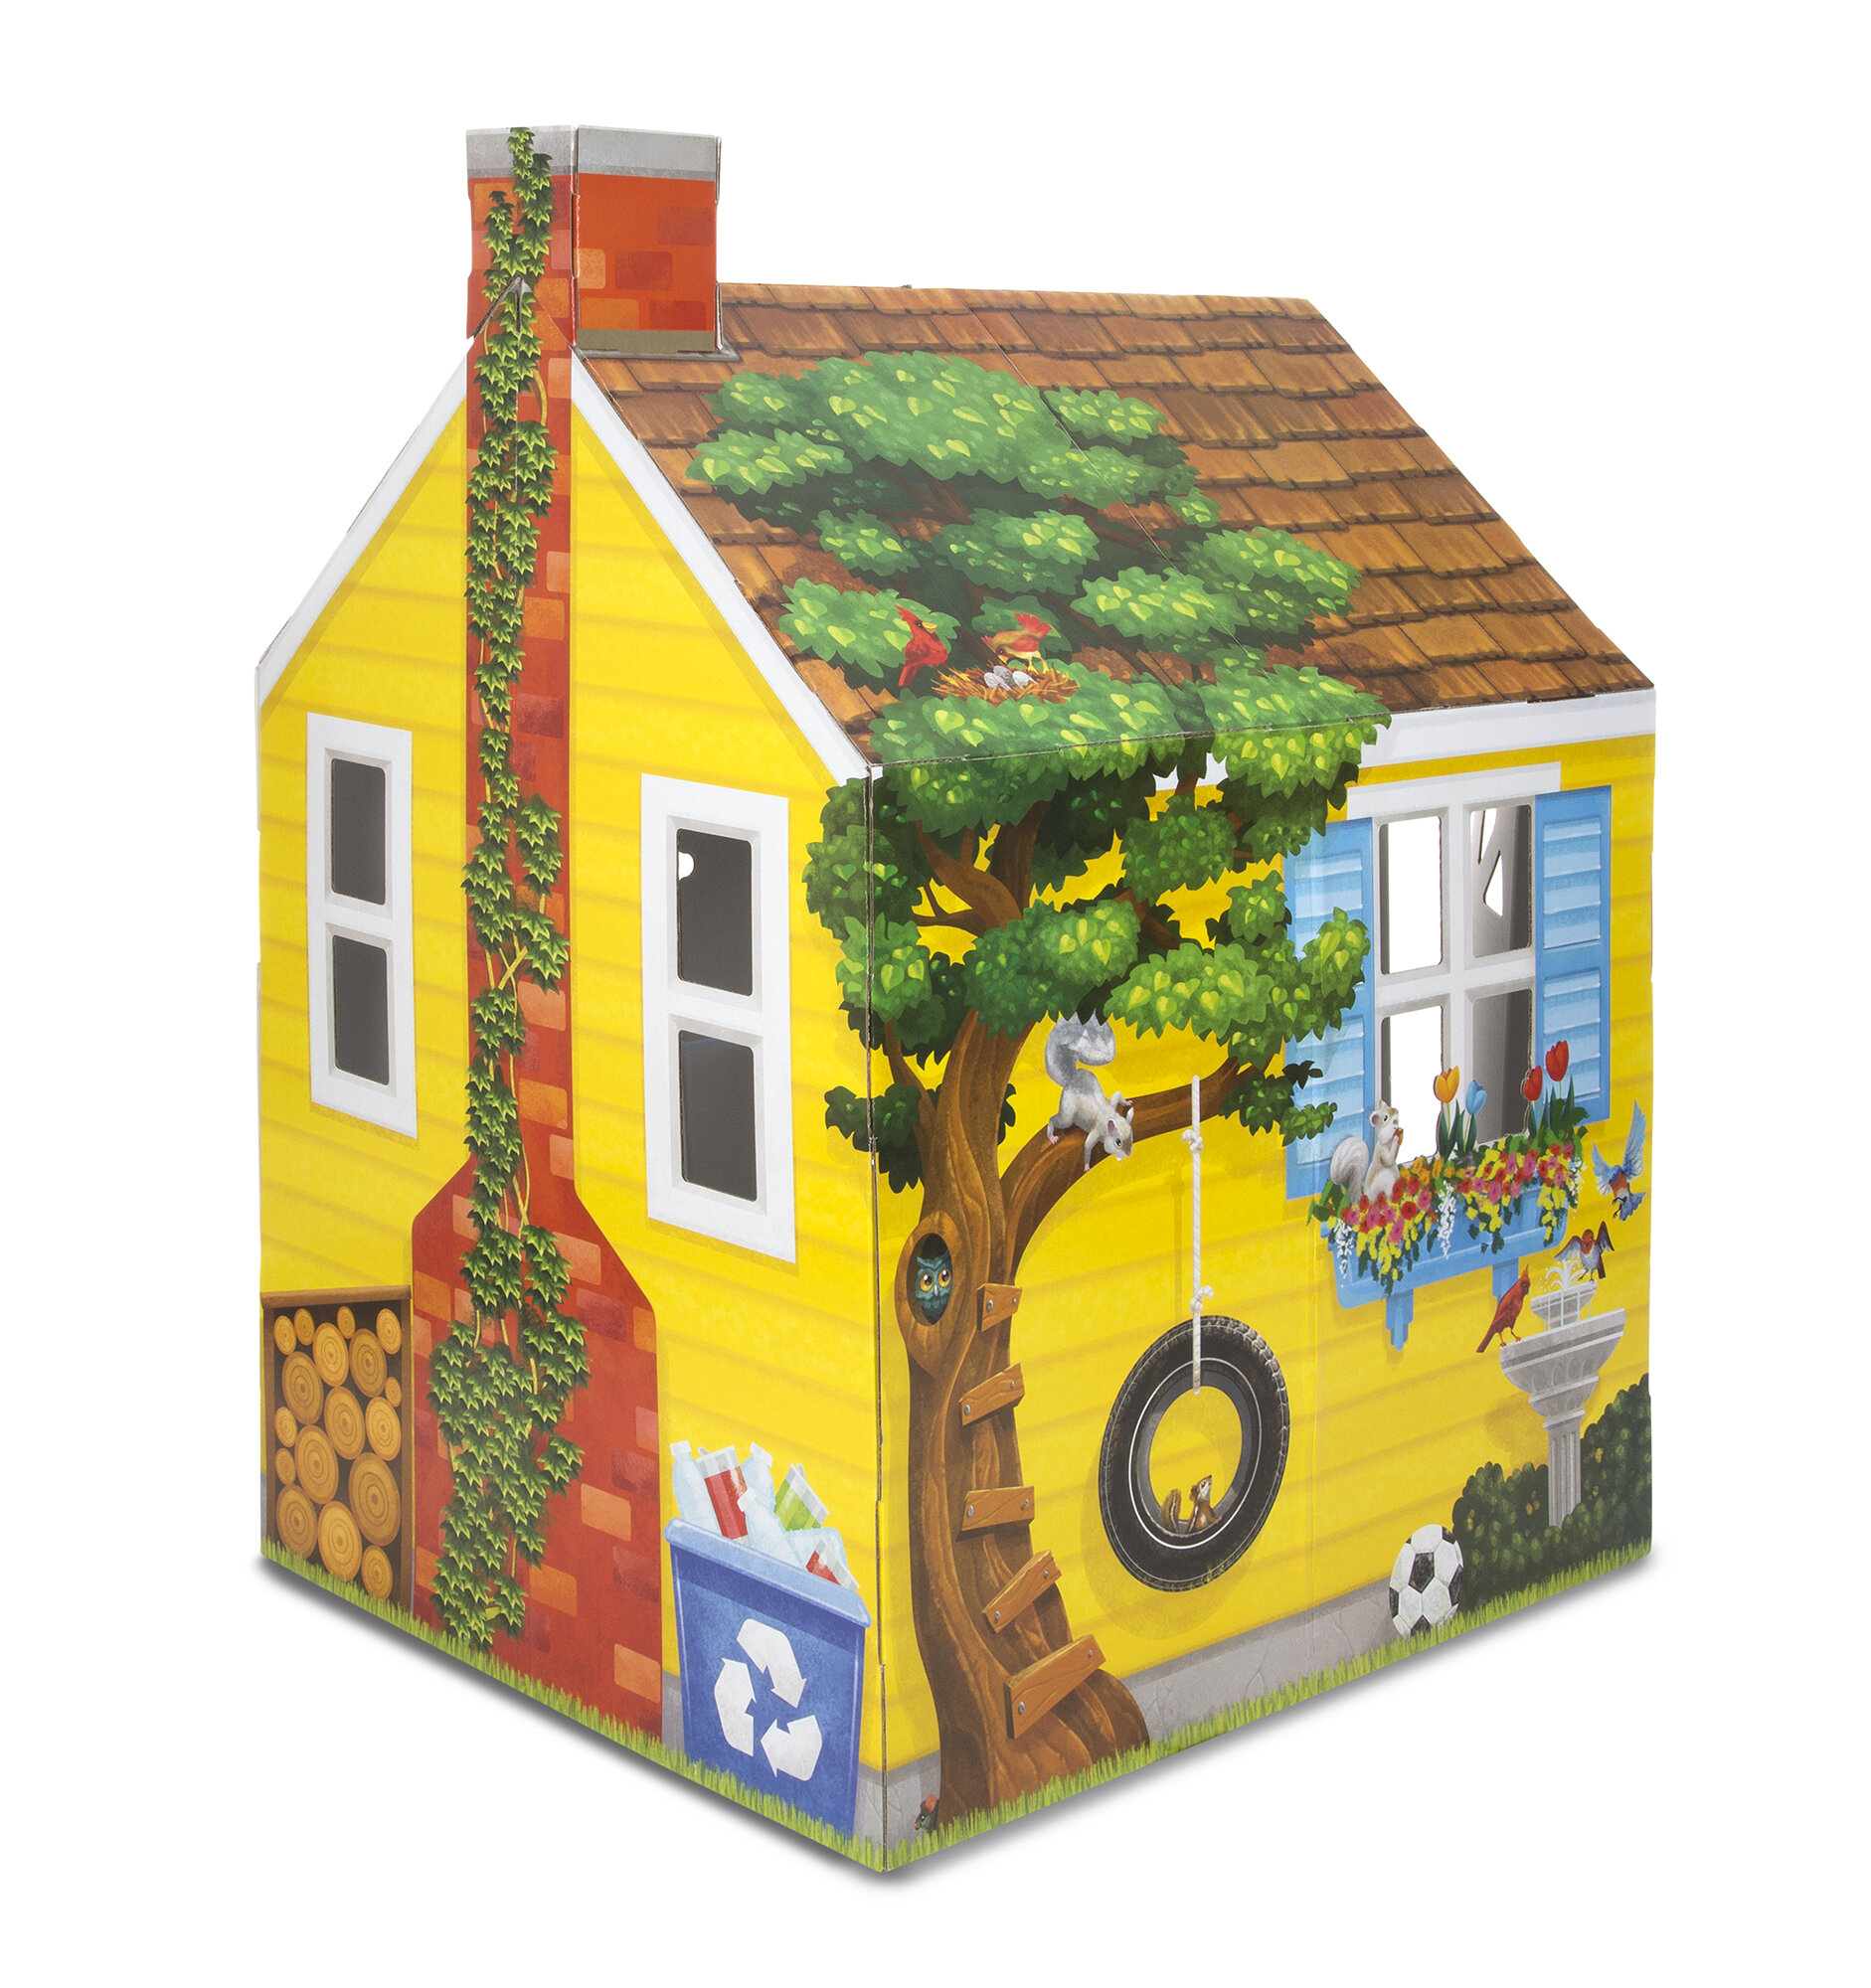 melissa & doug cardboard structure cottage playhouse